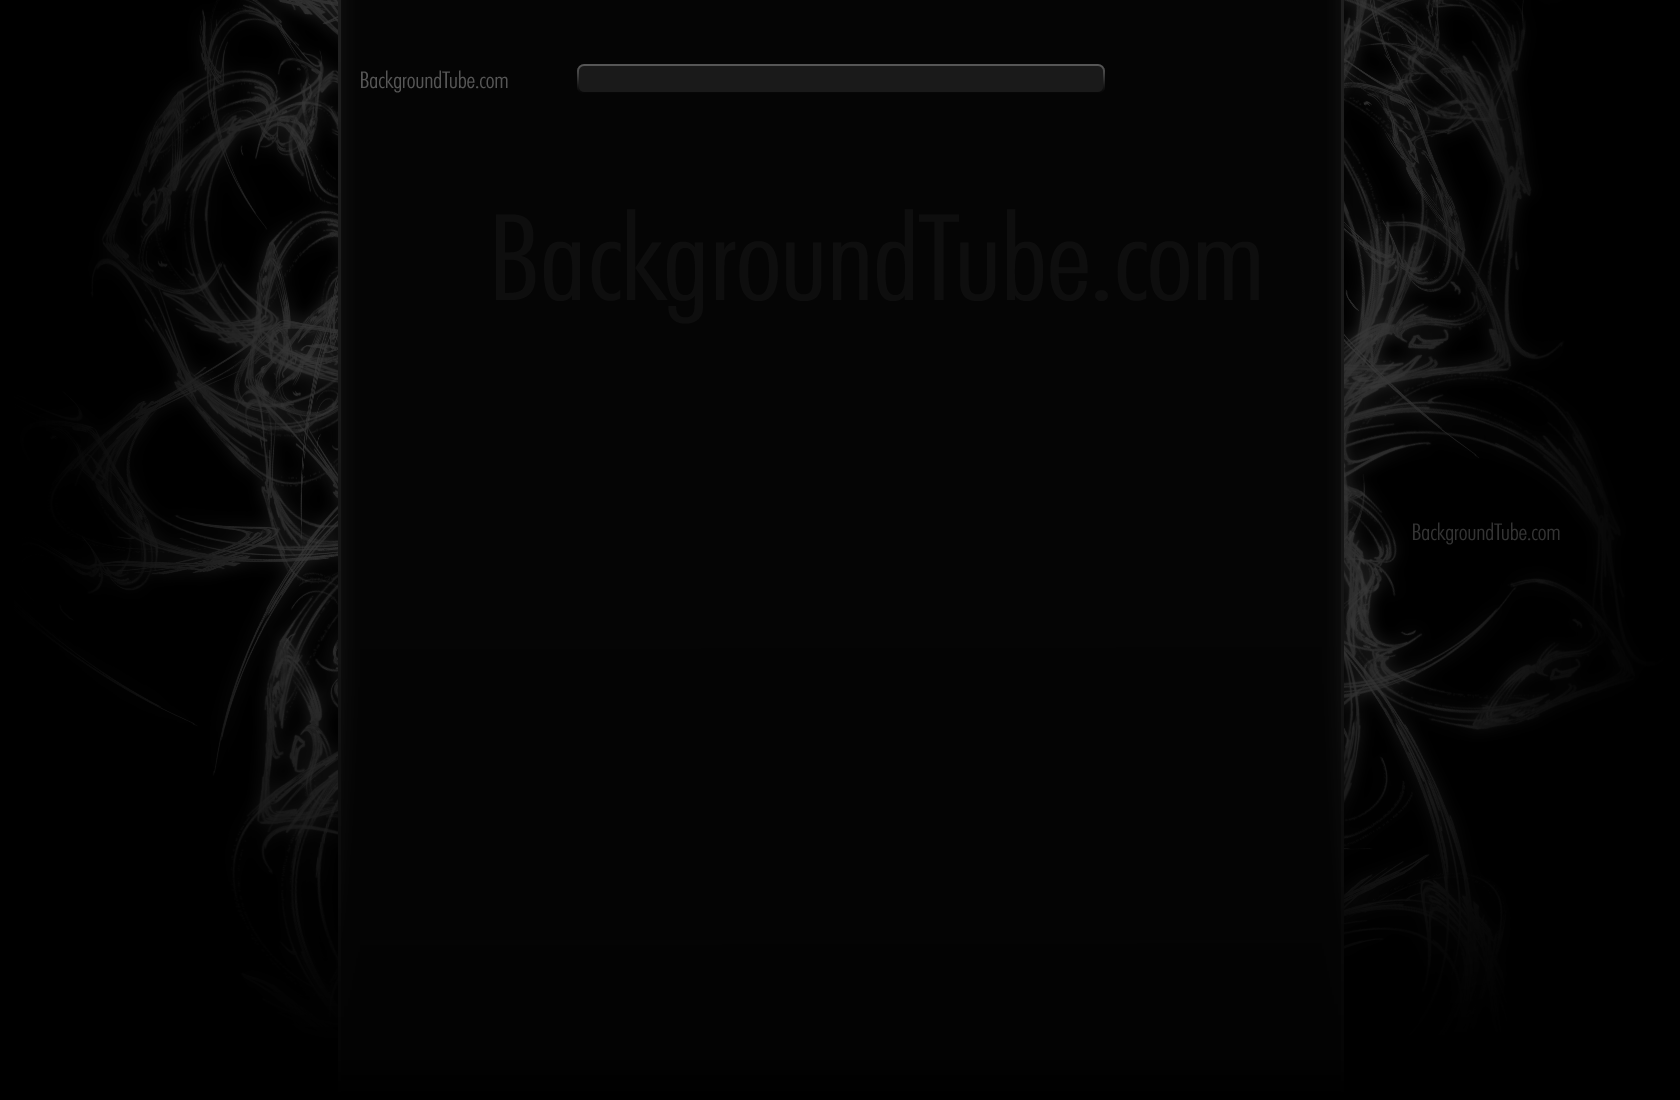 Black Background 45 66989 Image HD Wallpaper. Wallfoy.com